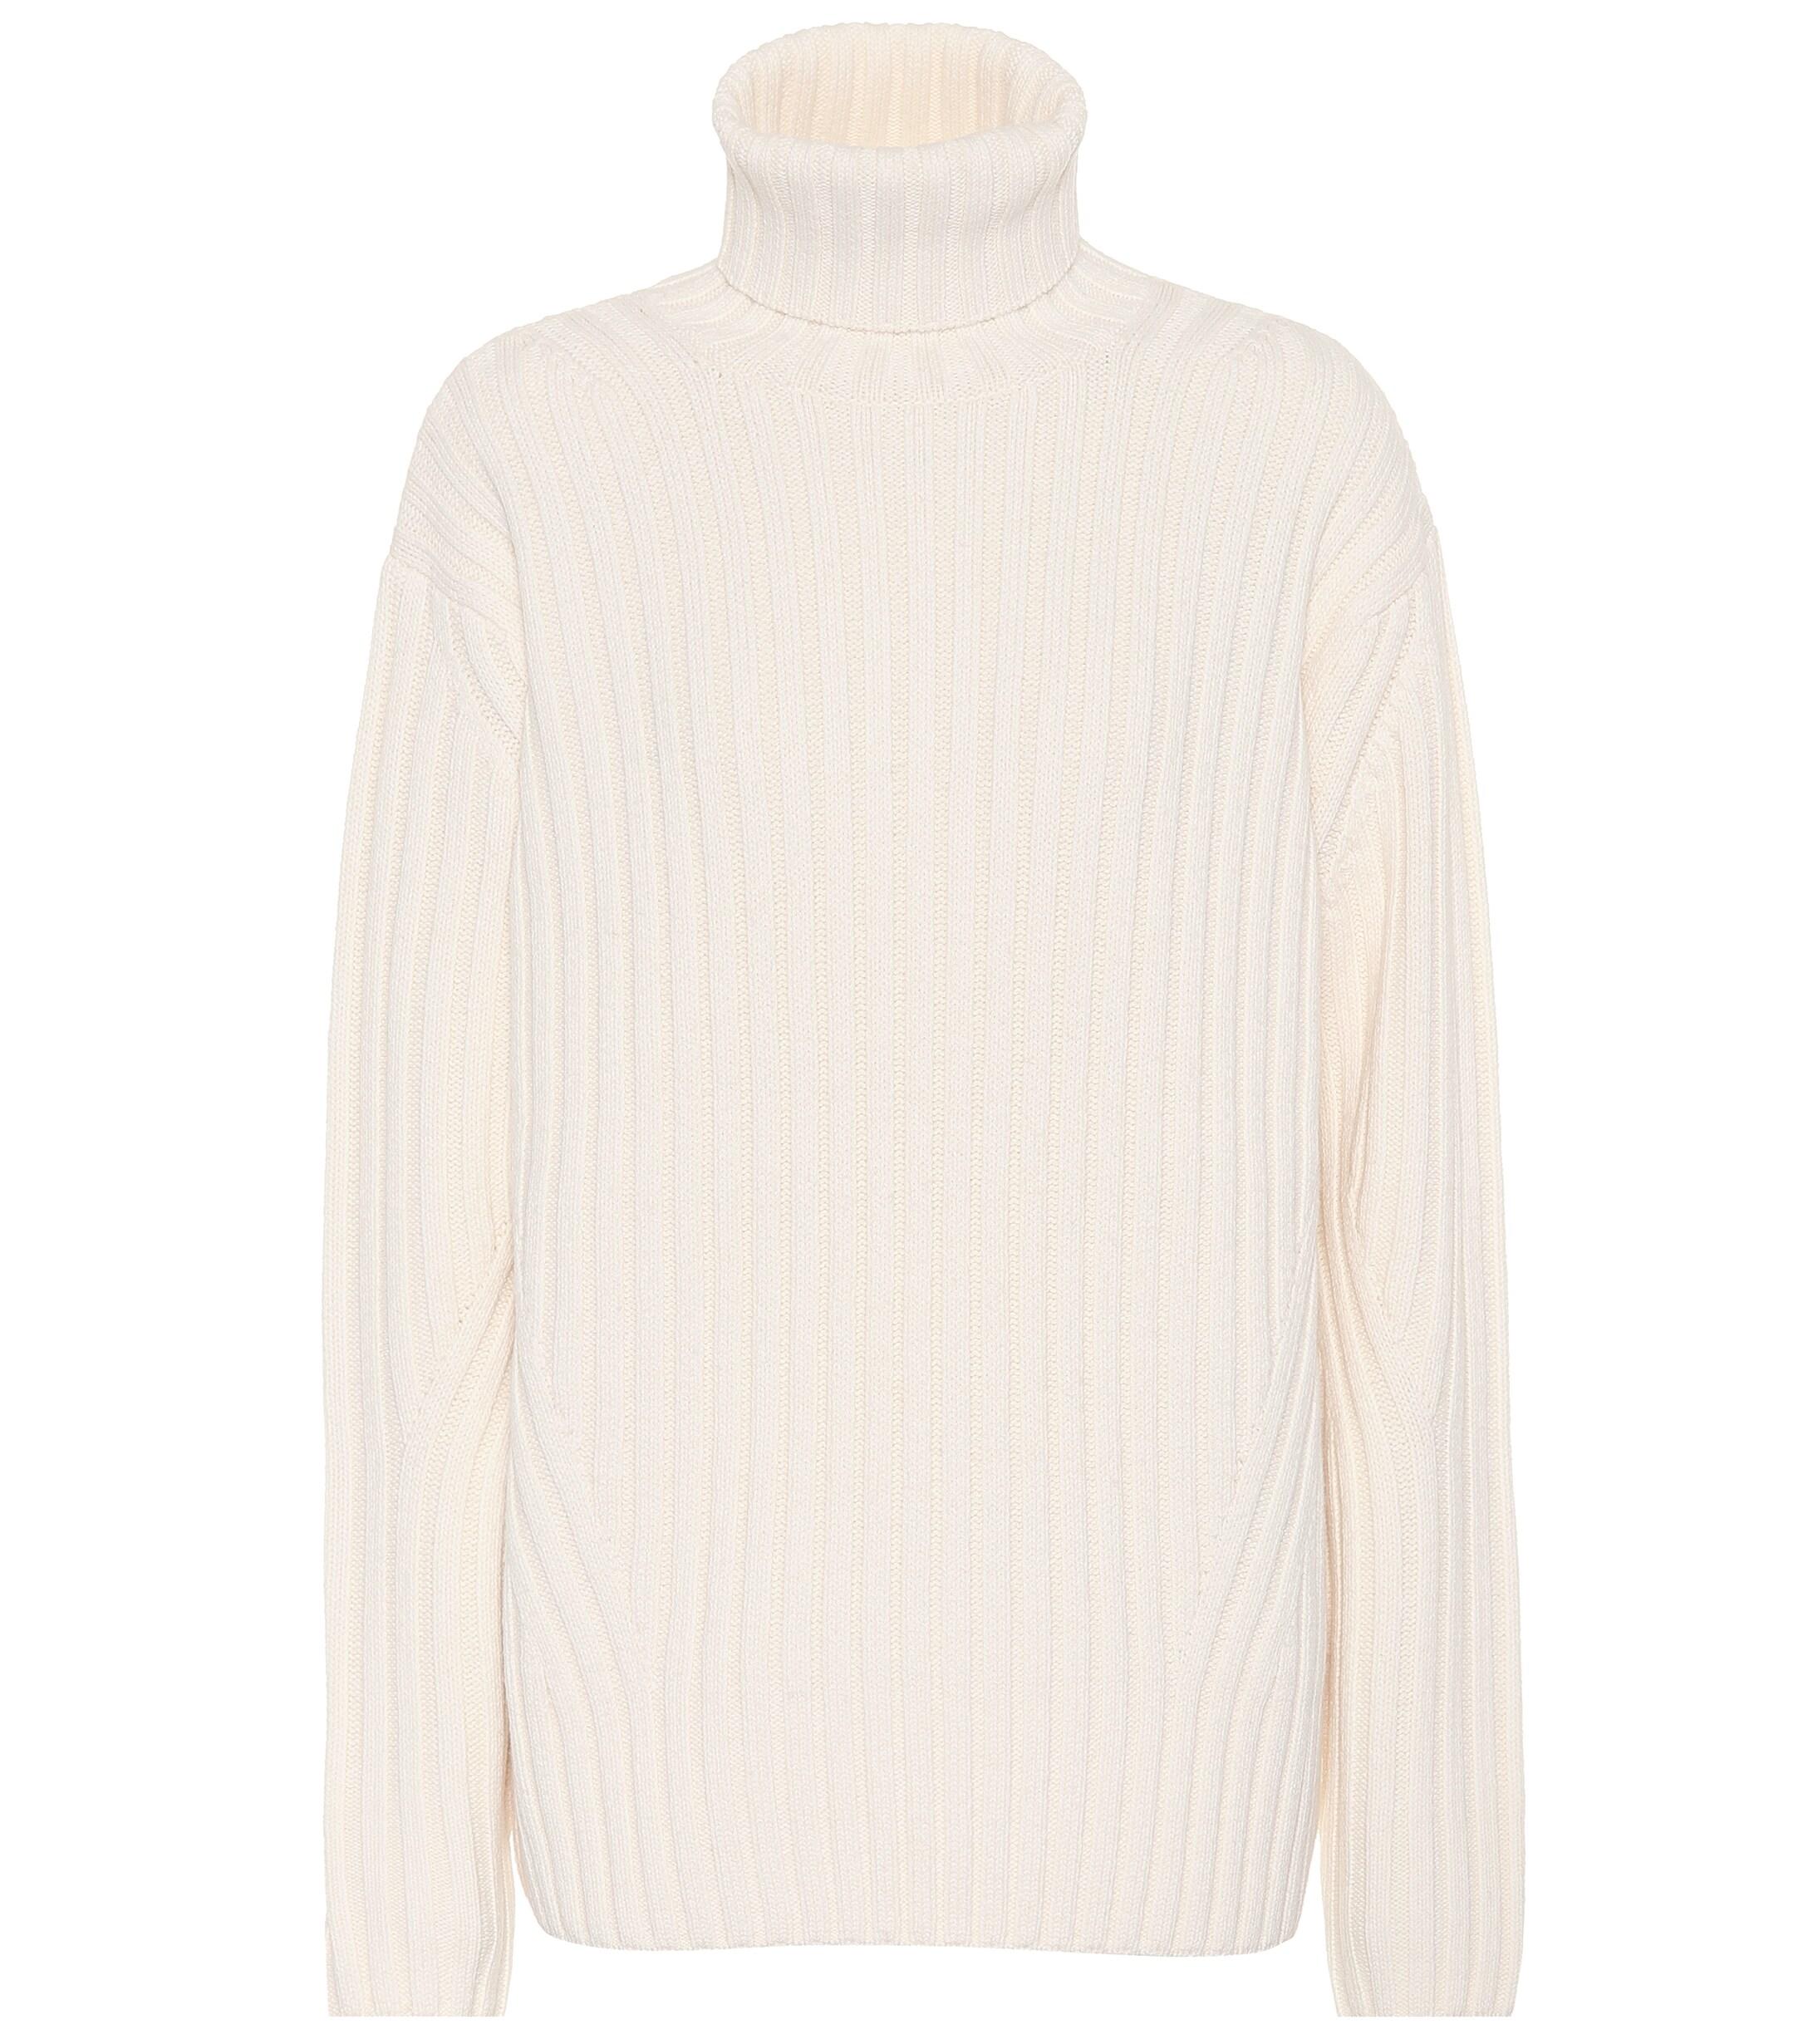 Dries Van Noten Wool Turtleneck Sweater in White - Lyst